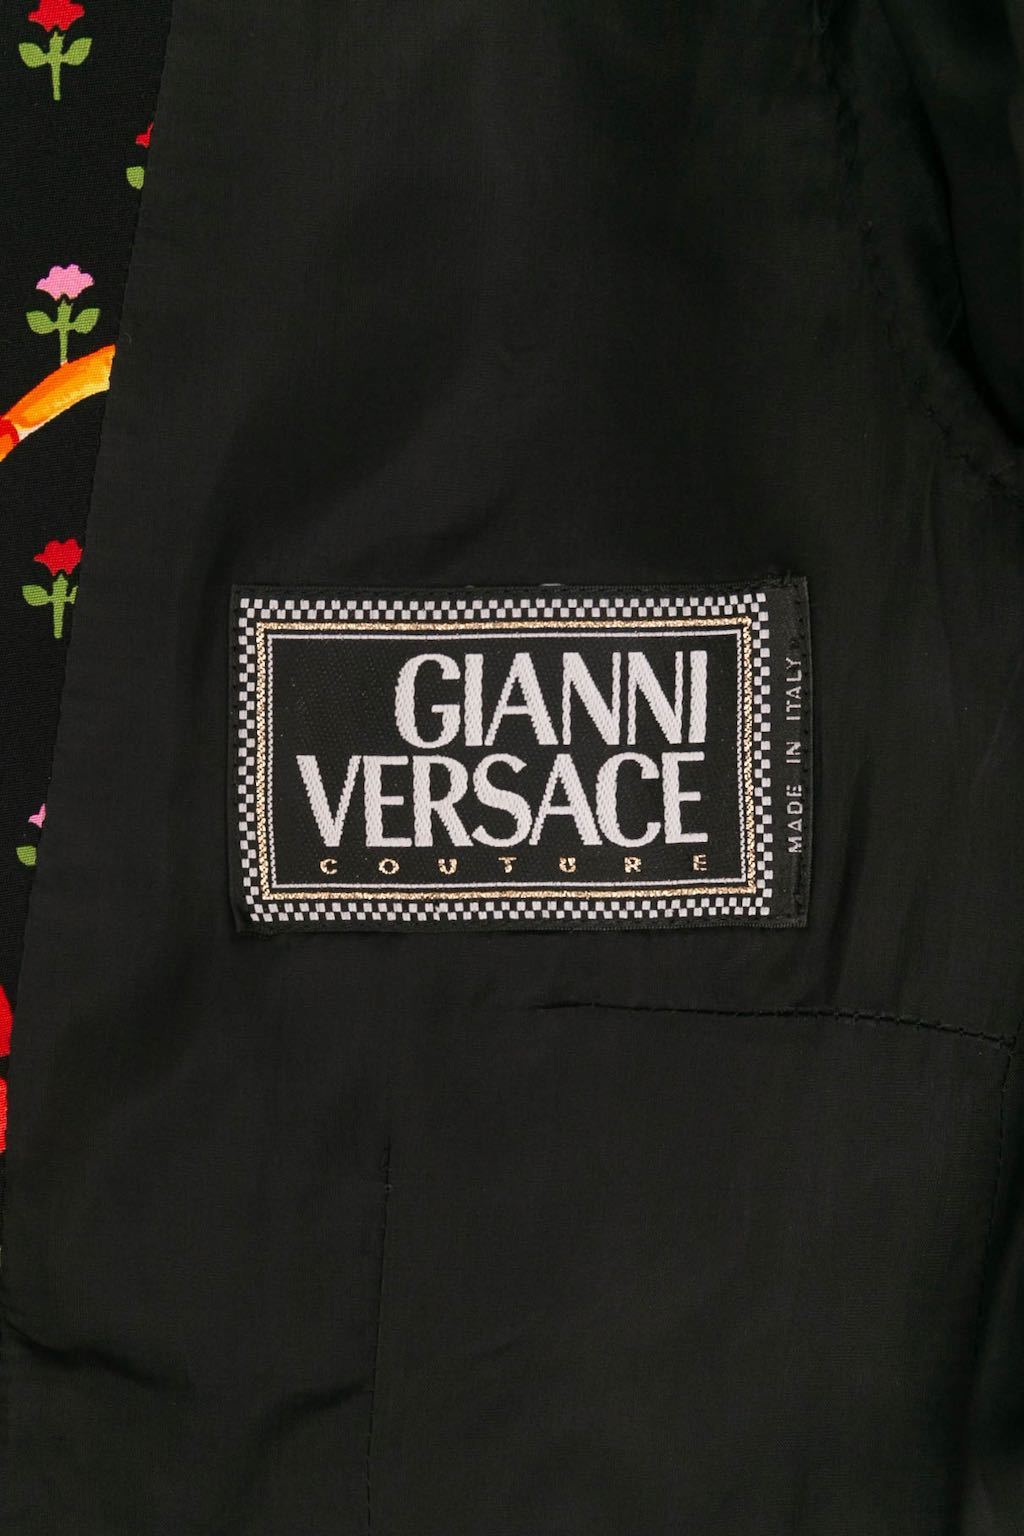 Veste Gianni Versace Couture 1993